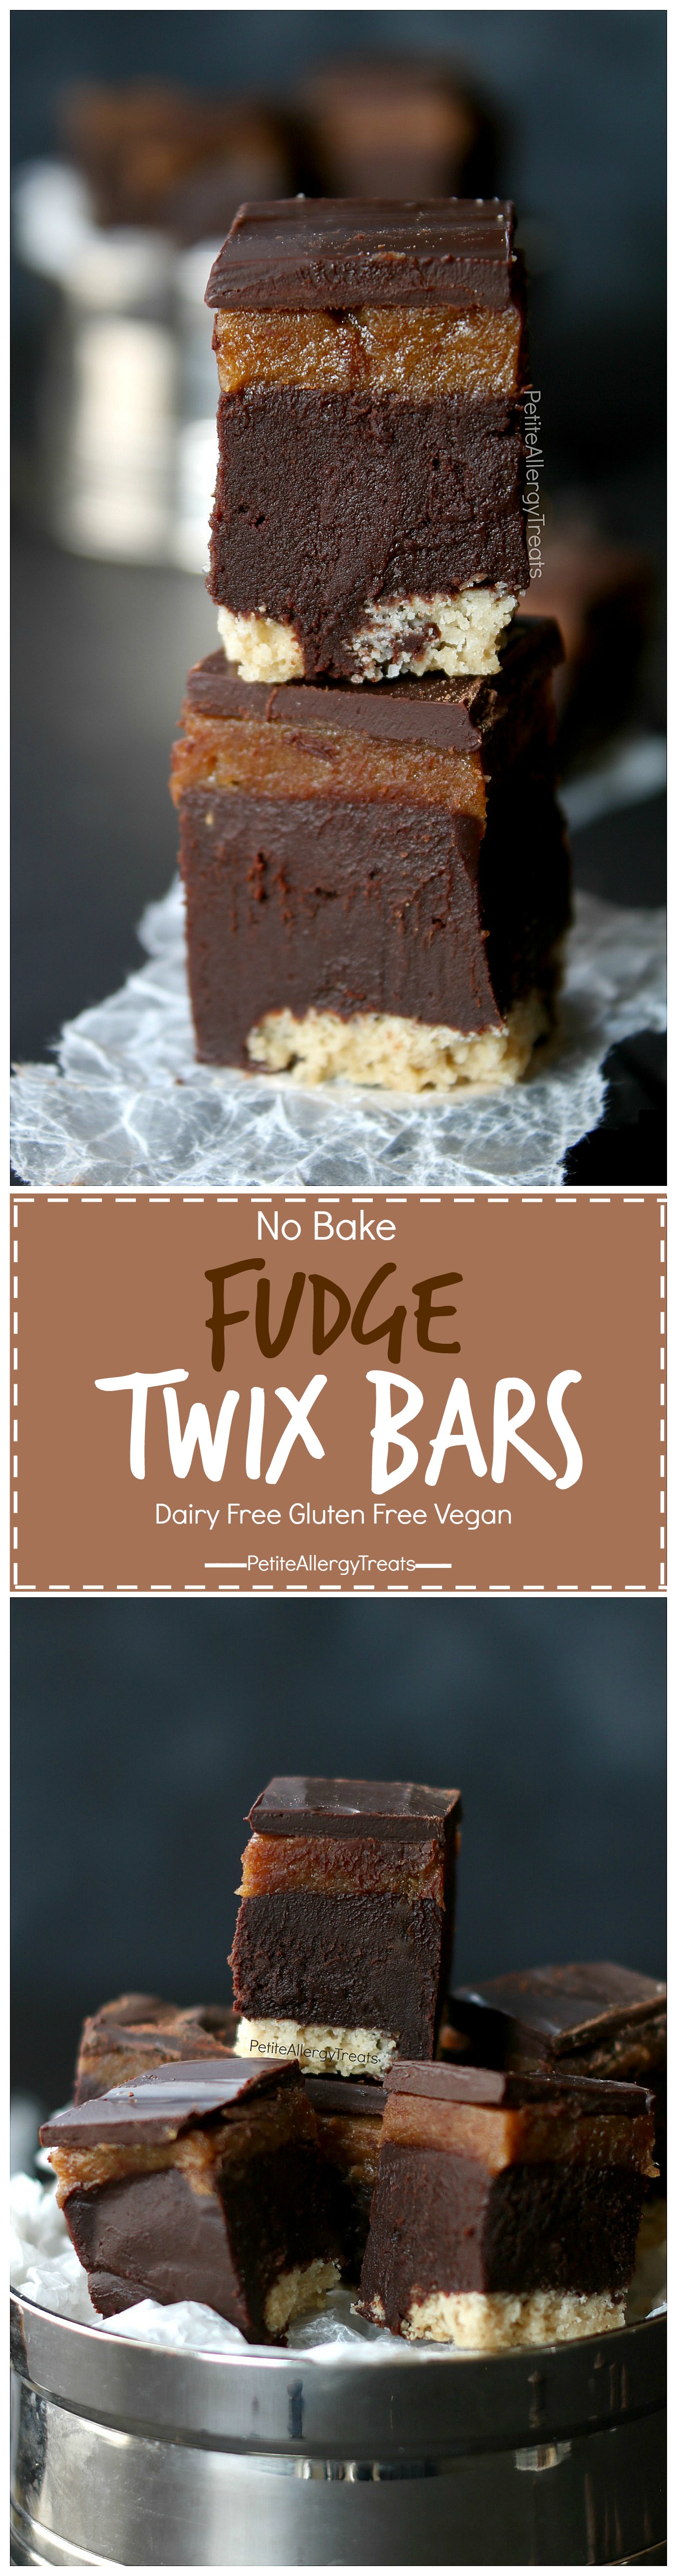 No bake Twix Fudge Bars Recipe (gluten free dairy free Vegan)- Healthier date caramel and oil free ganache fudge filling. Food Allergy friendly!